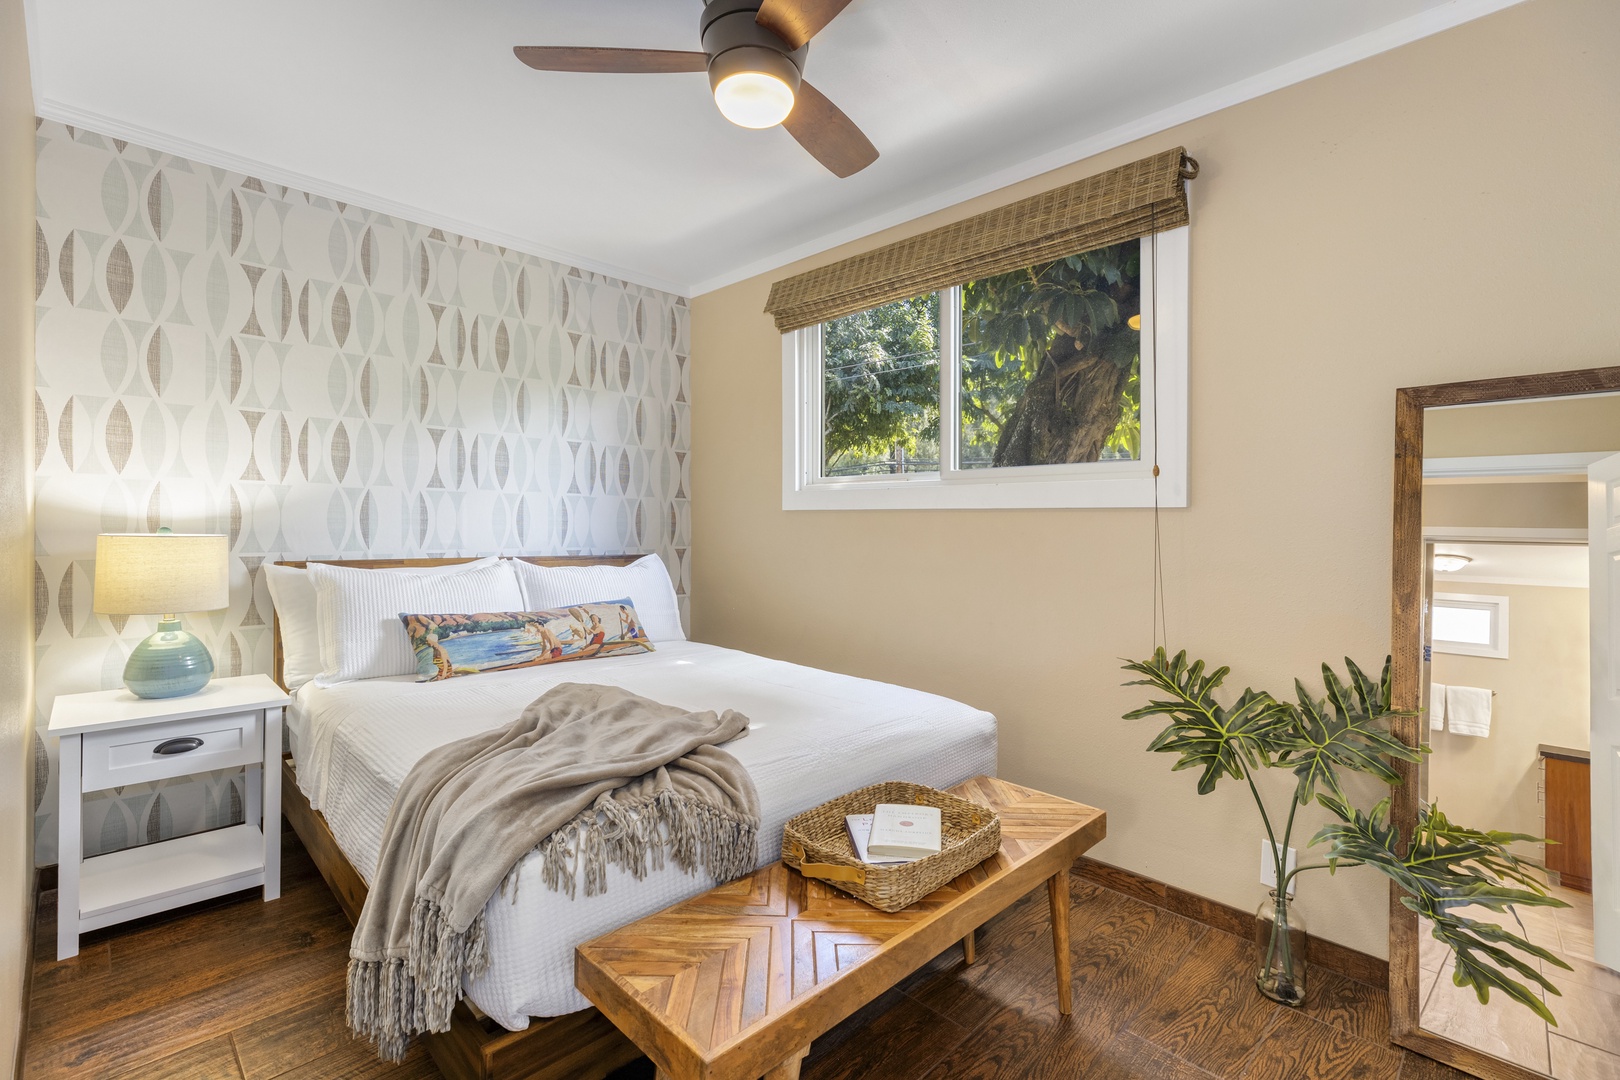 Haleiwa Vacation Rentals, Ehukai Beach Hale - Downstairs third bedroom with queen bed